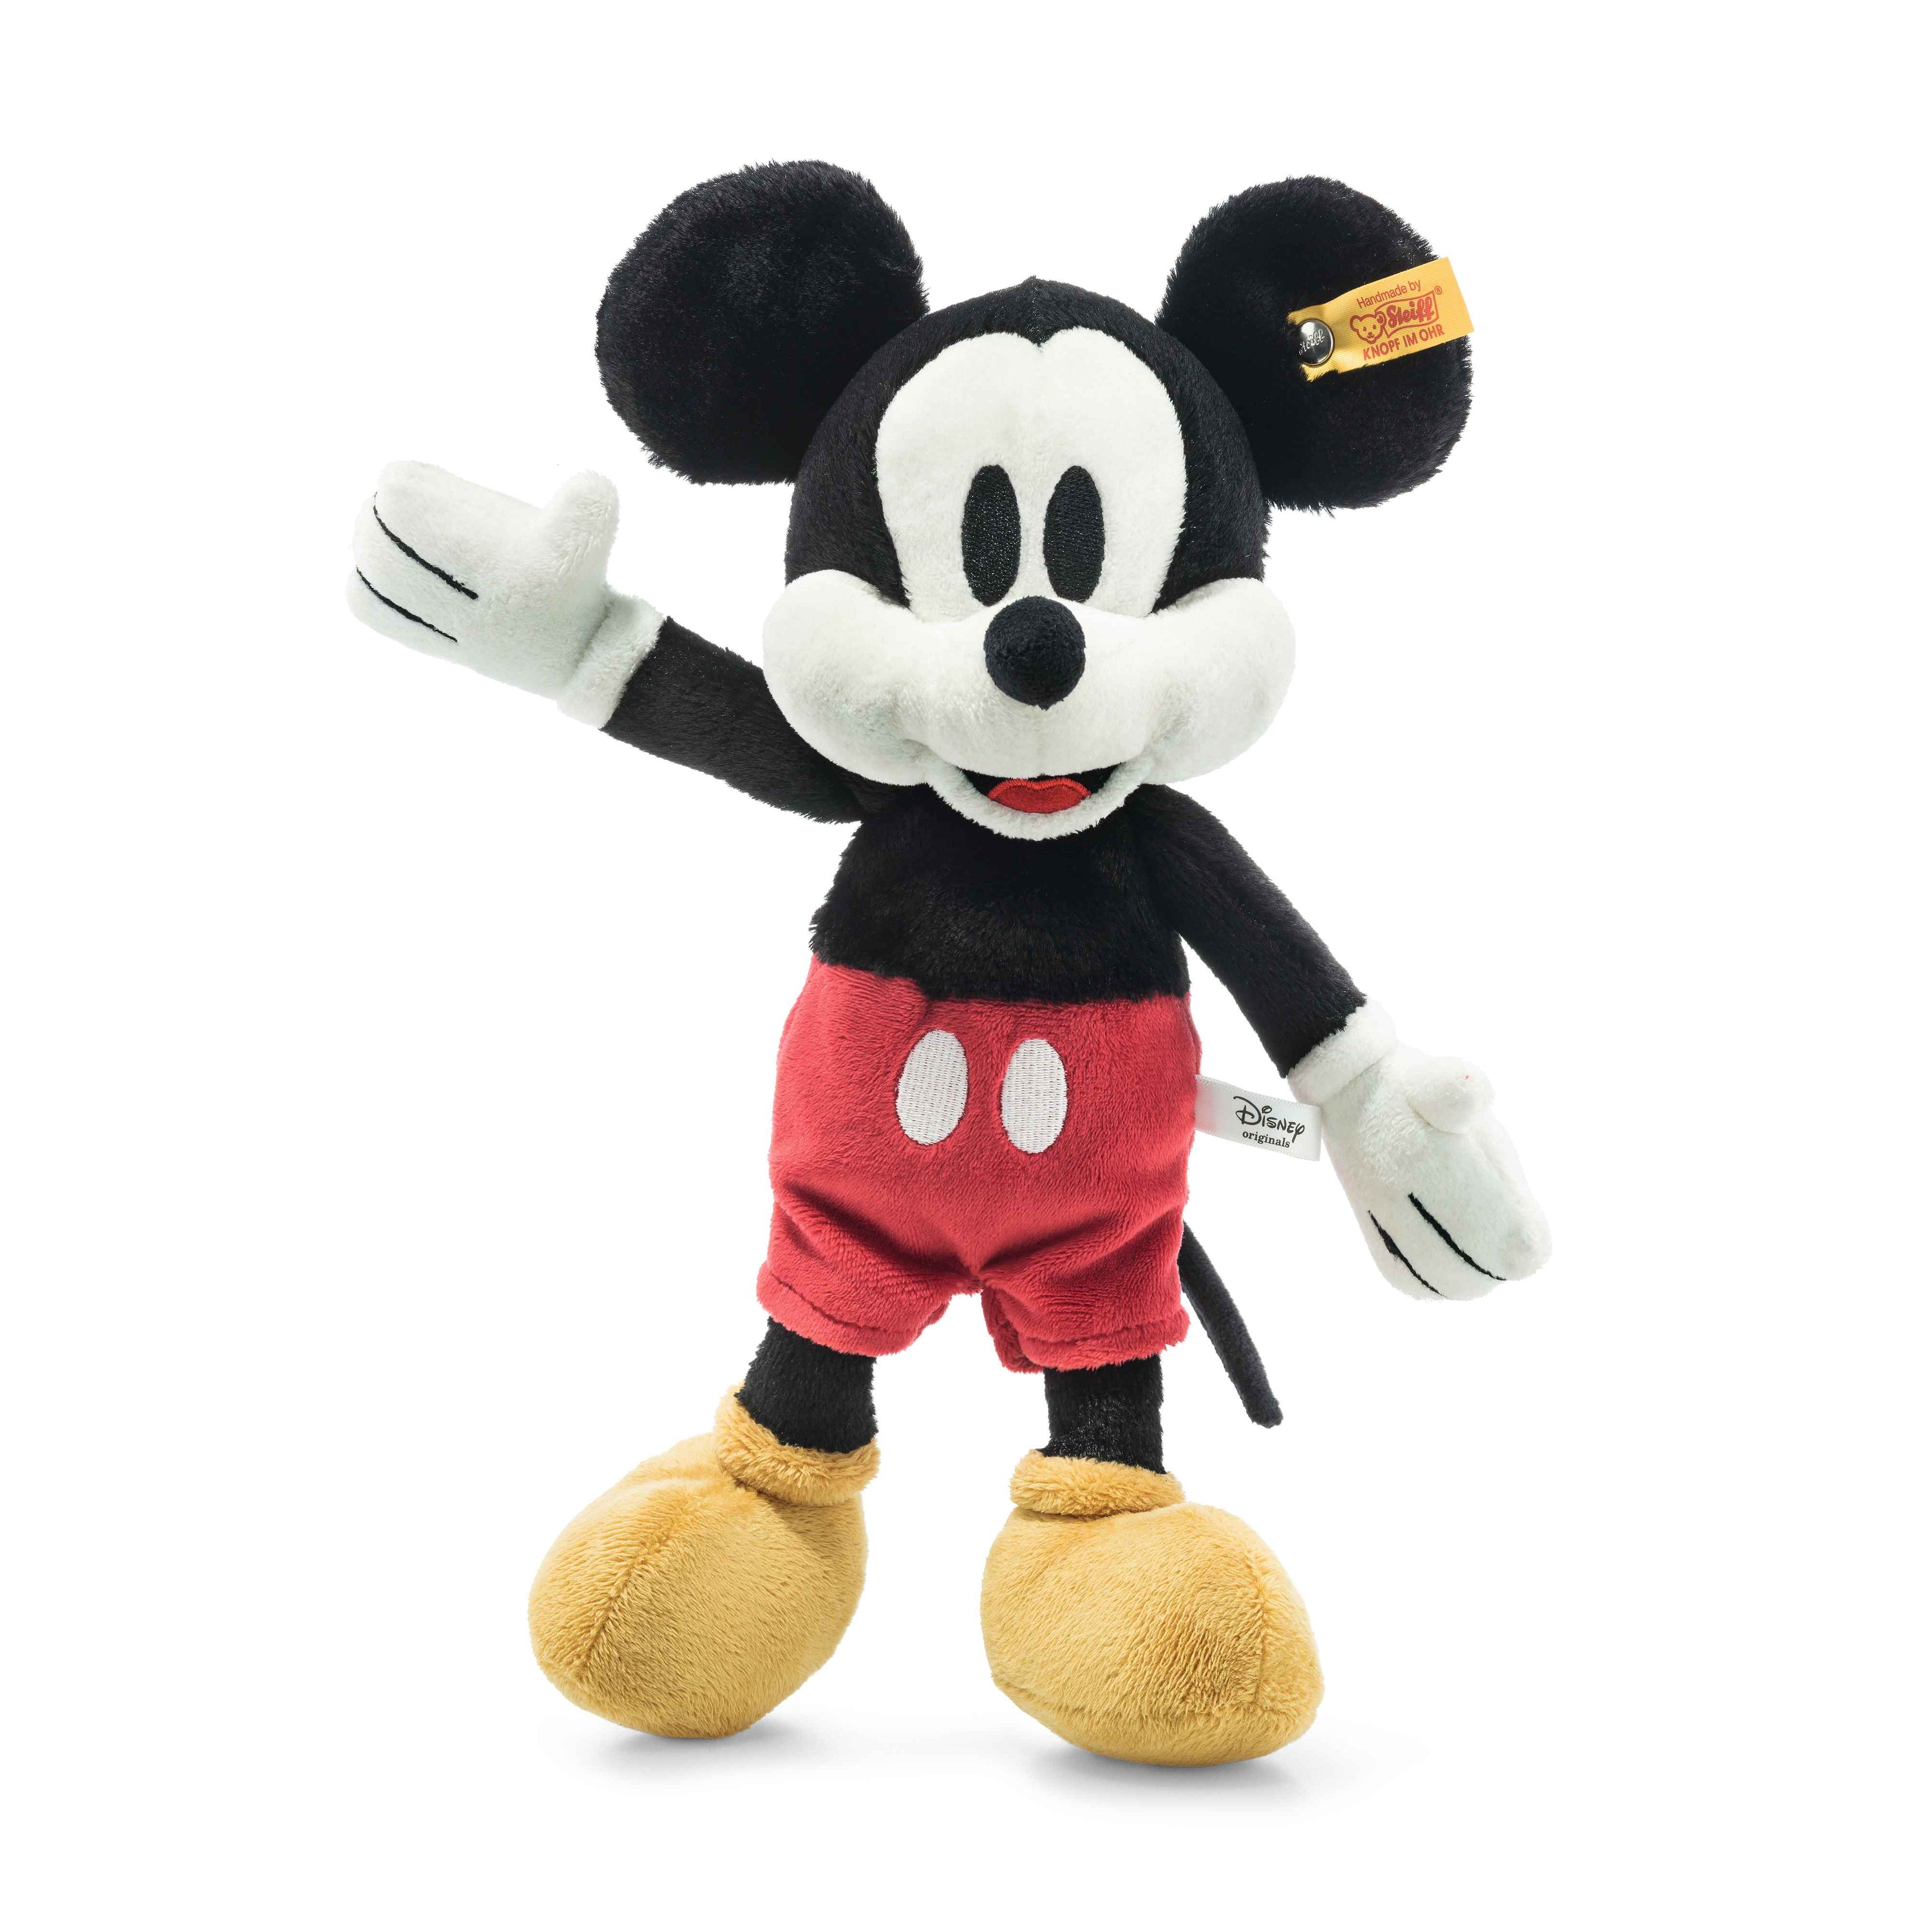 Disney's Mickey Mouse Stuffed Plush Toy